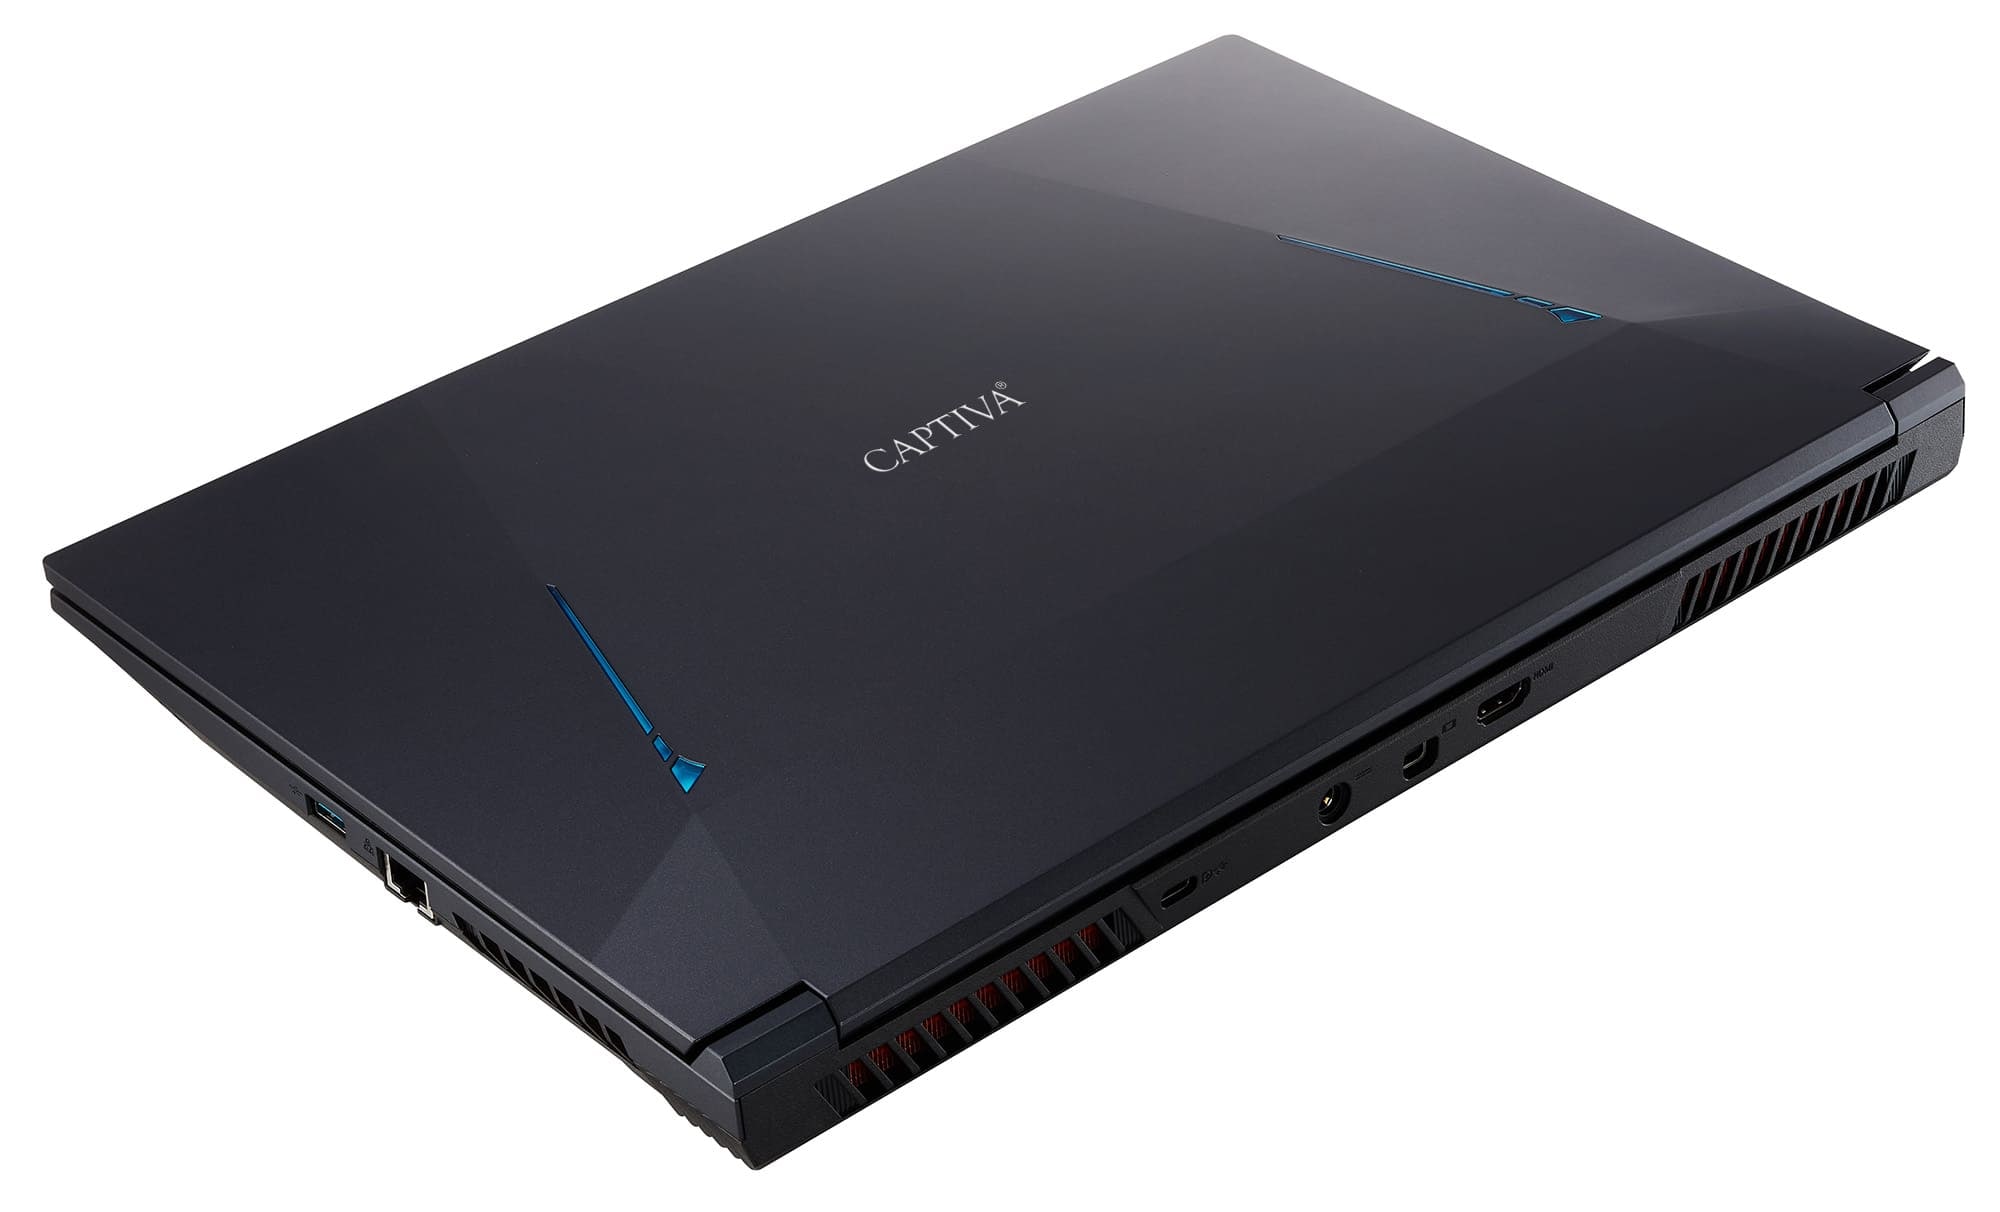 CAPTIVA Gaming-Notebook »Advanced Gaming I74-430«, Intel, Core i5, 1000 GB SSD